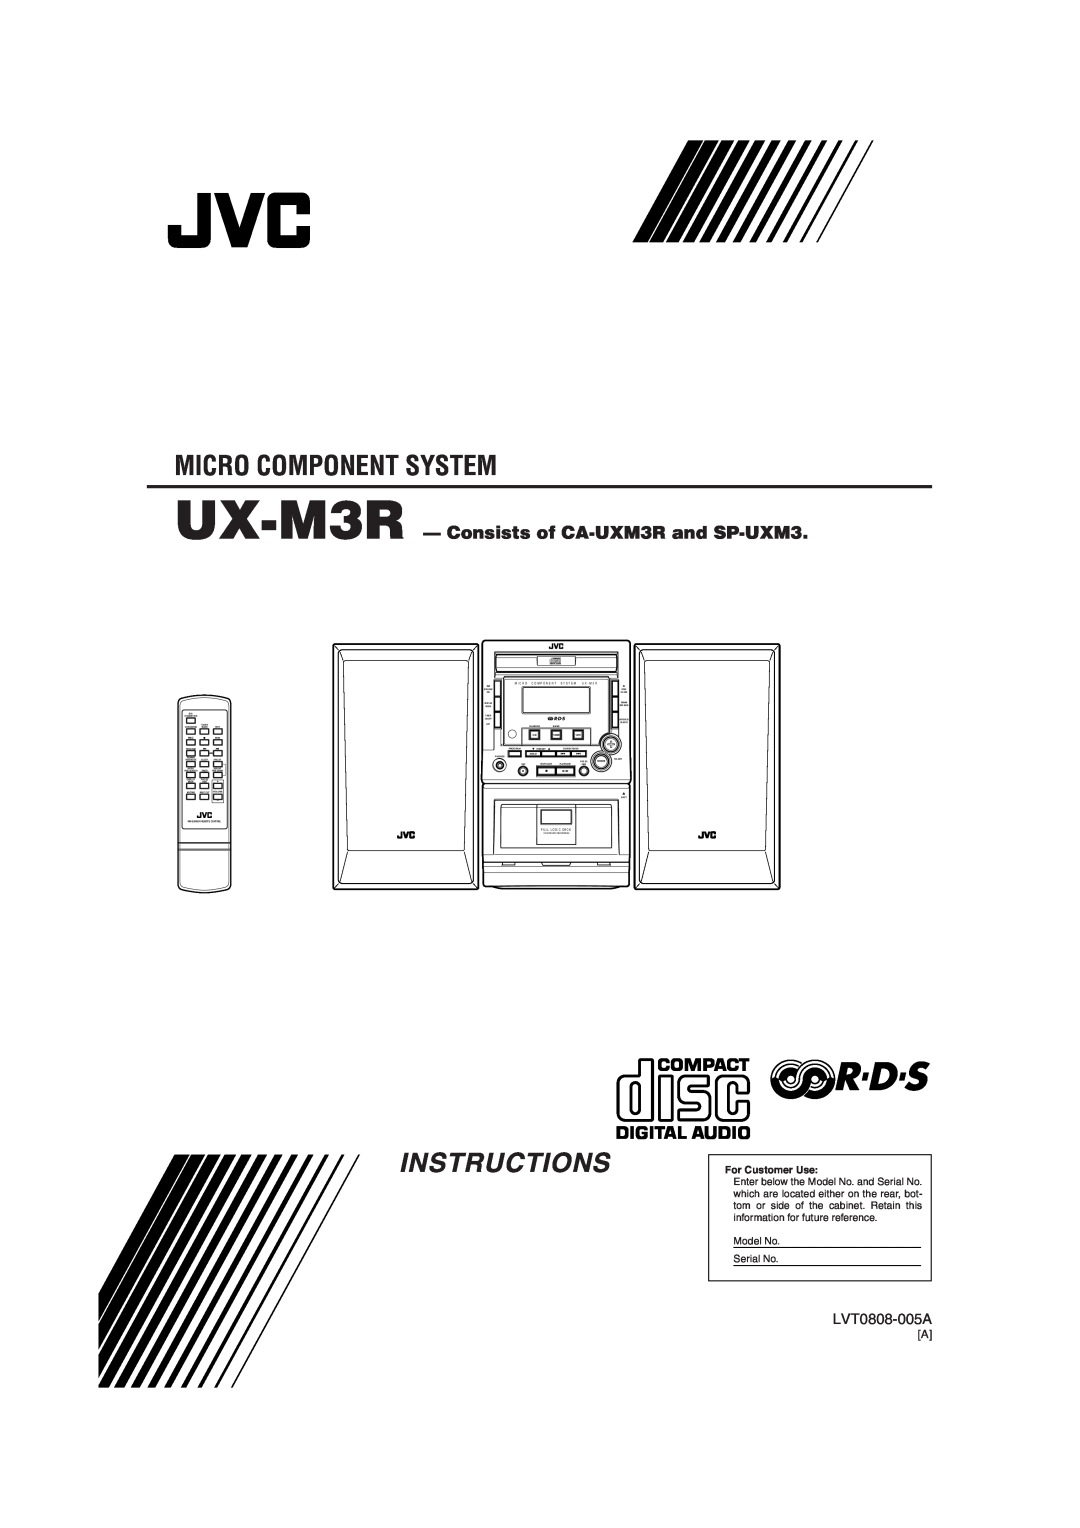 JVC manual Micro Component System, UX-M3R - Consists of CA-UXM3Rand SP-UXM3, Instructions, LVT0808-005A 